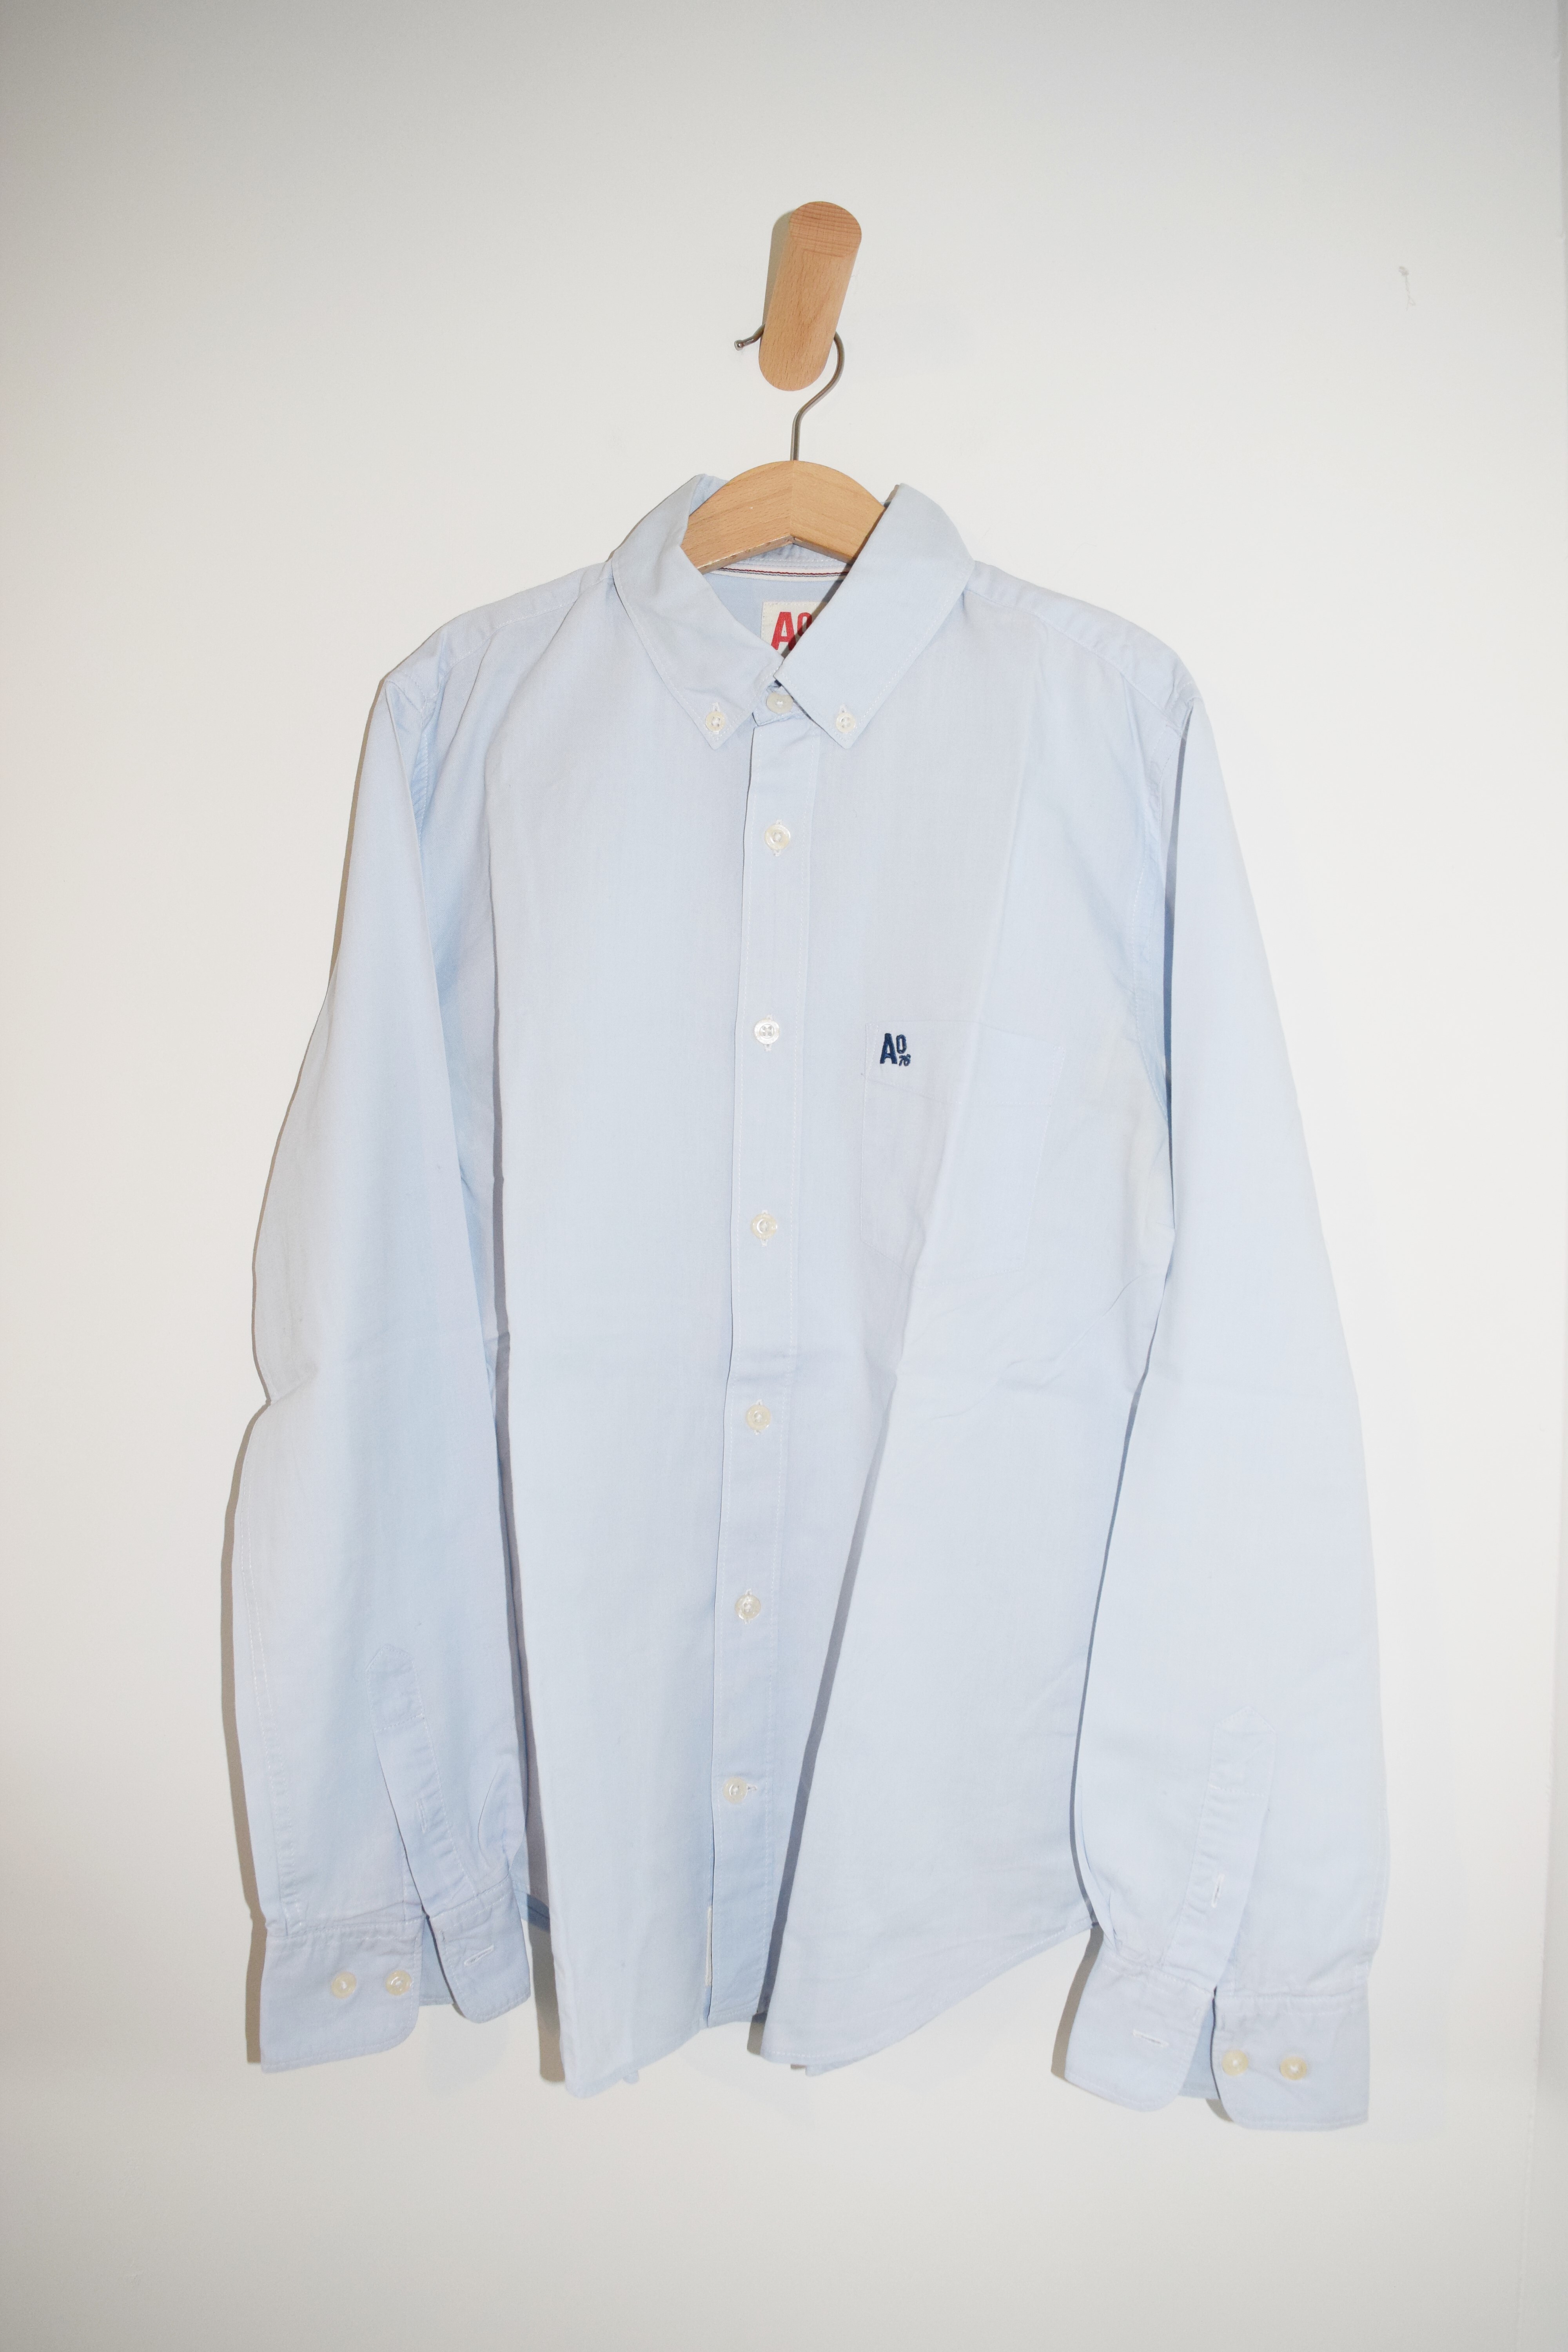 Lichtblauw hemd, American Outfitters, 14 jaar 